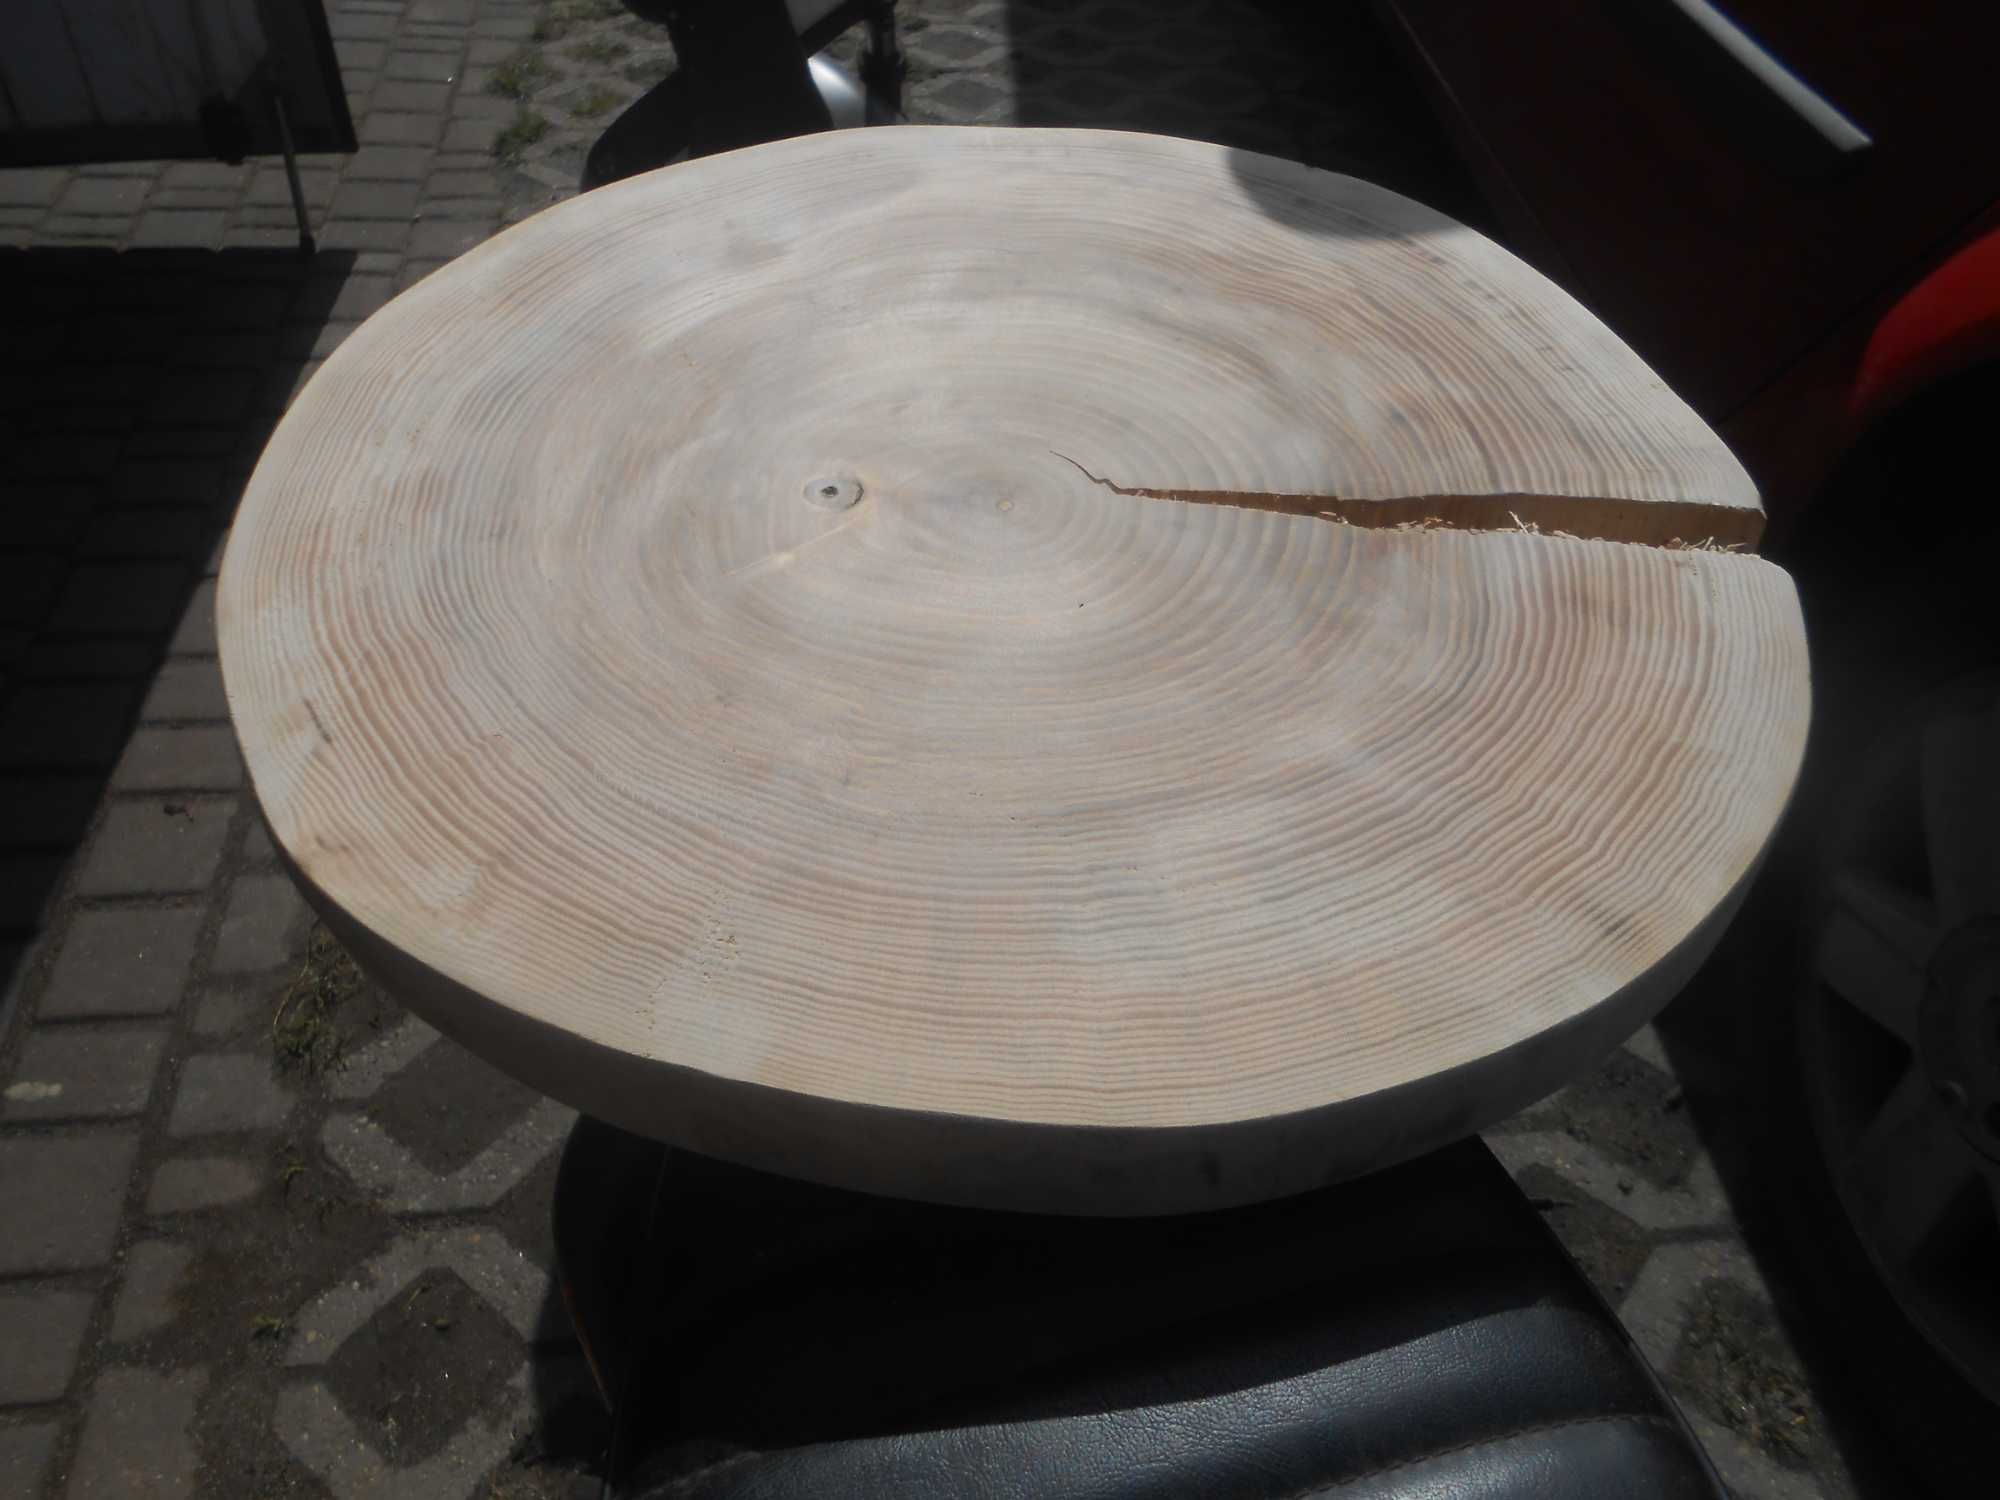 Plaster drewna jesion średnica. 42 cm